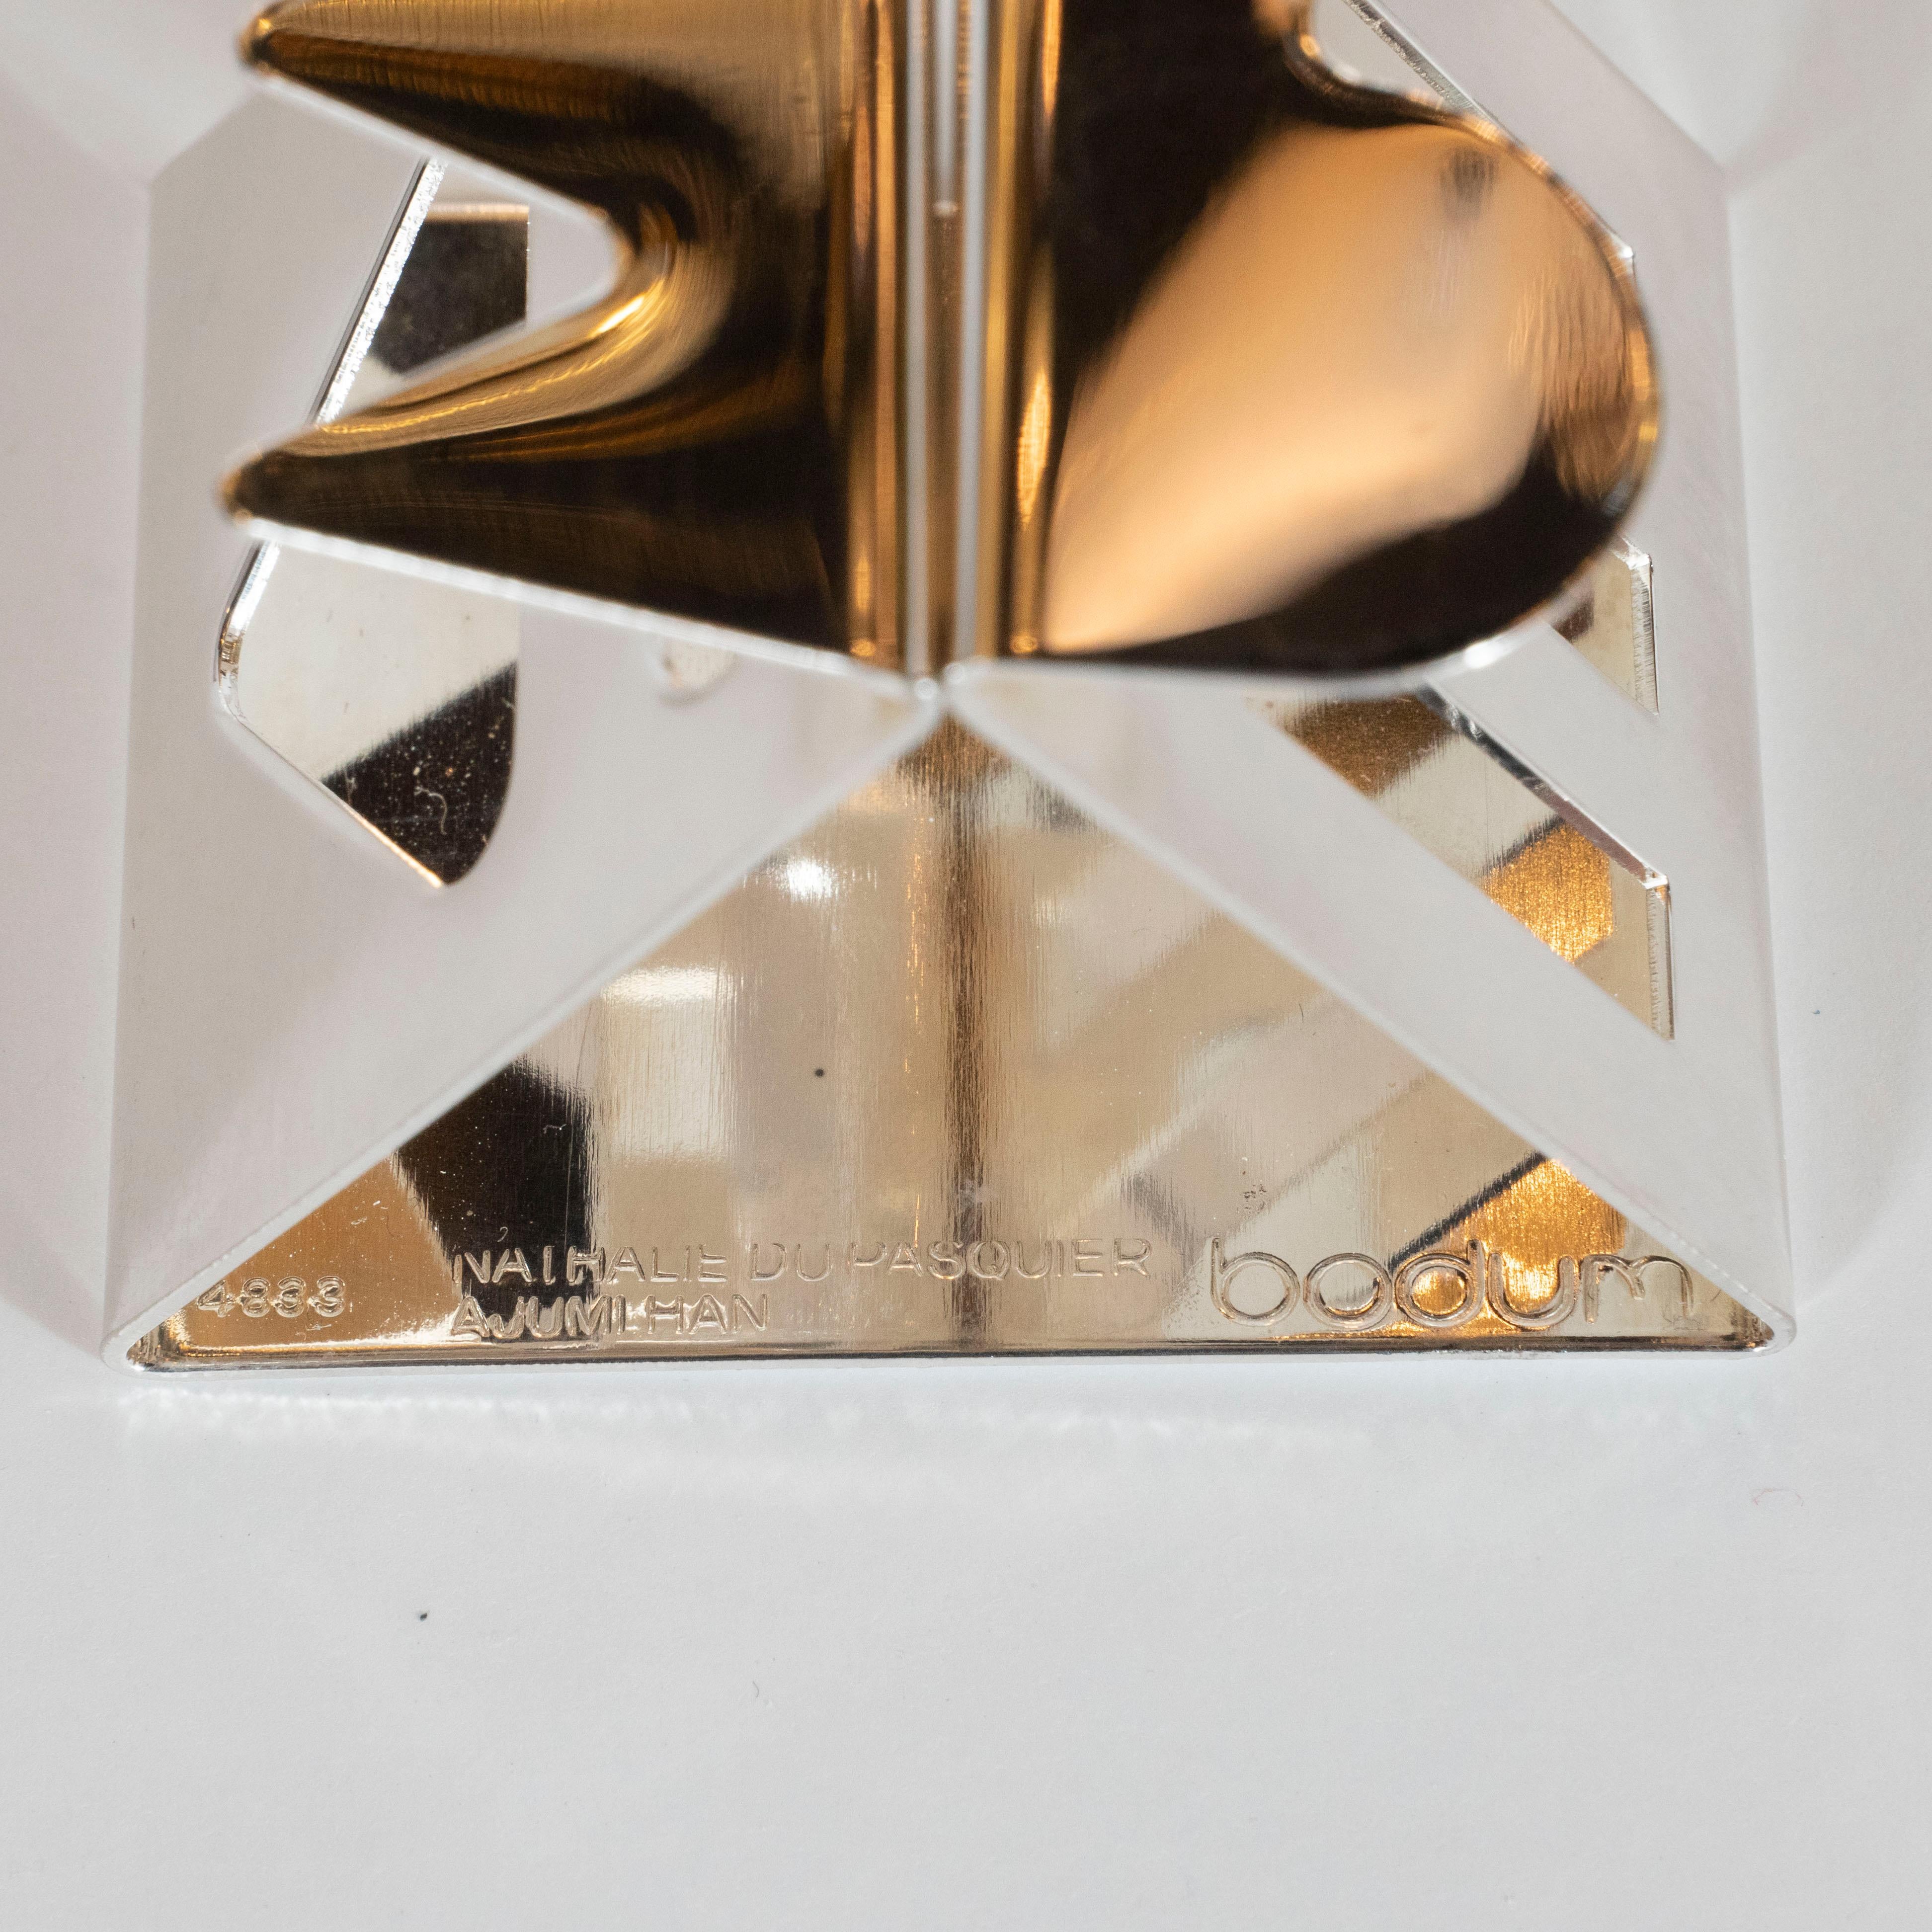 Modernist Memphis Silverplate Napkin Rings by Nathalie du Pasquier for Bodum 4